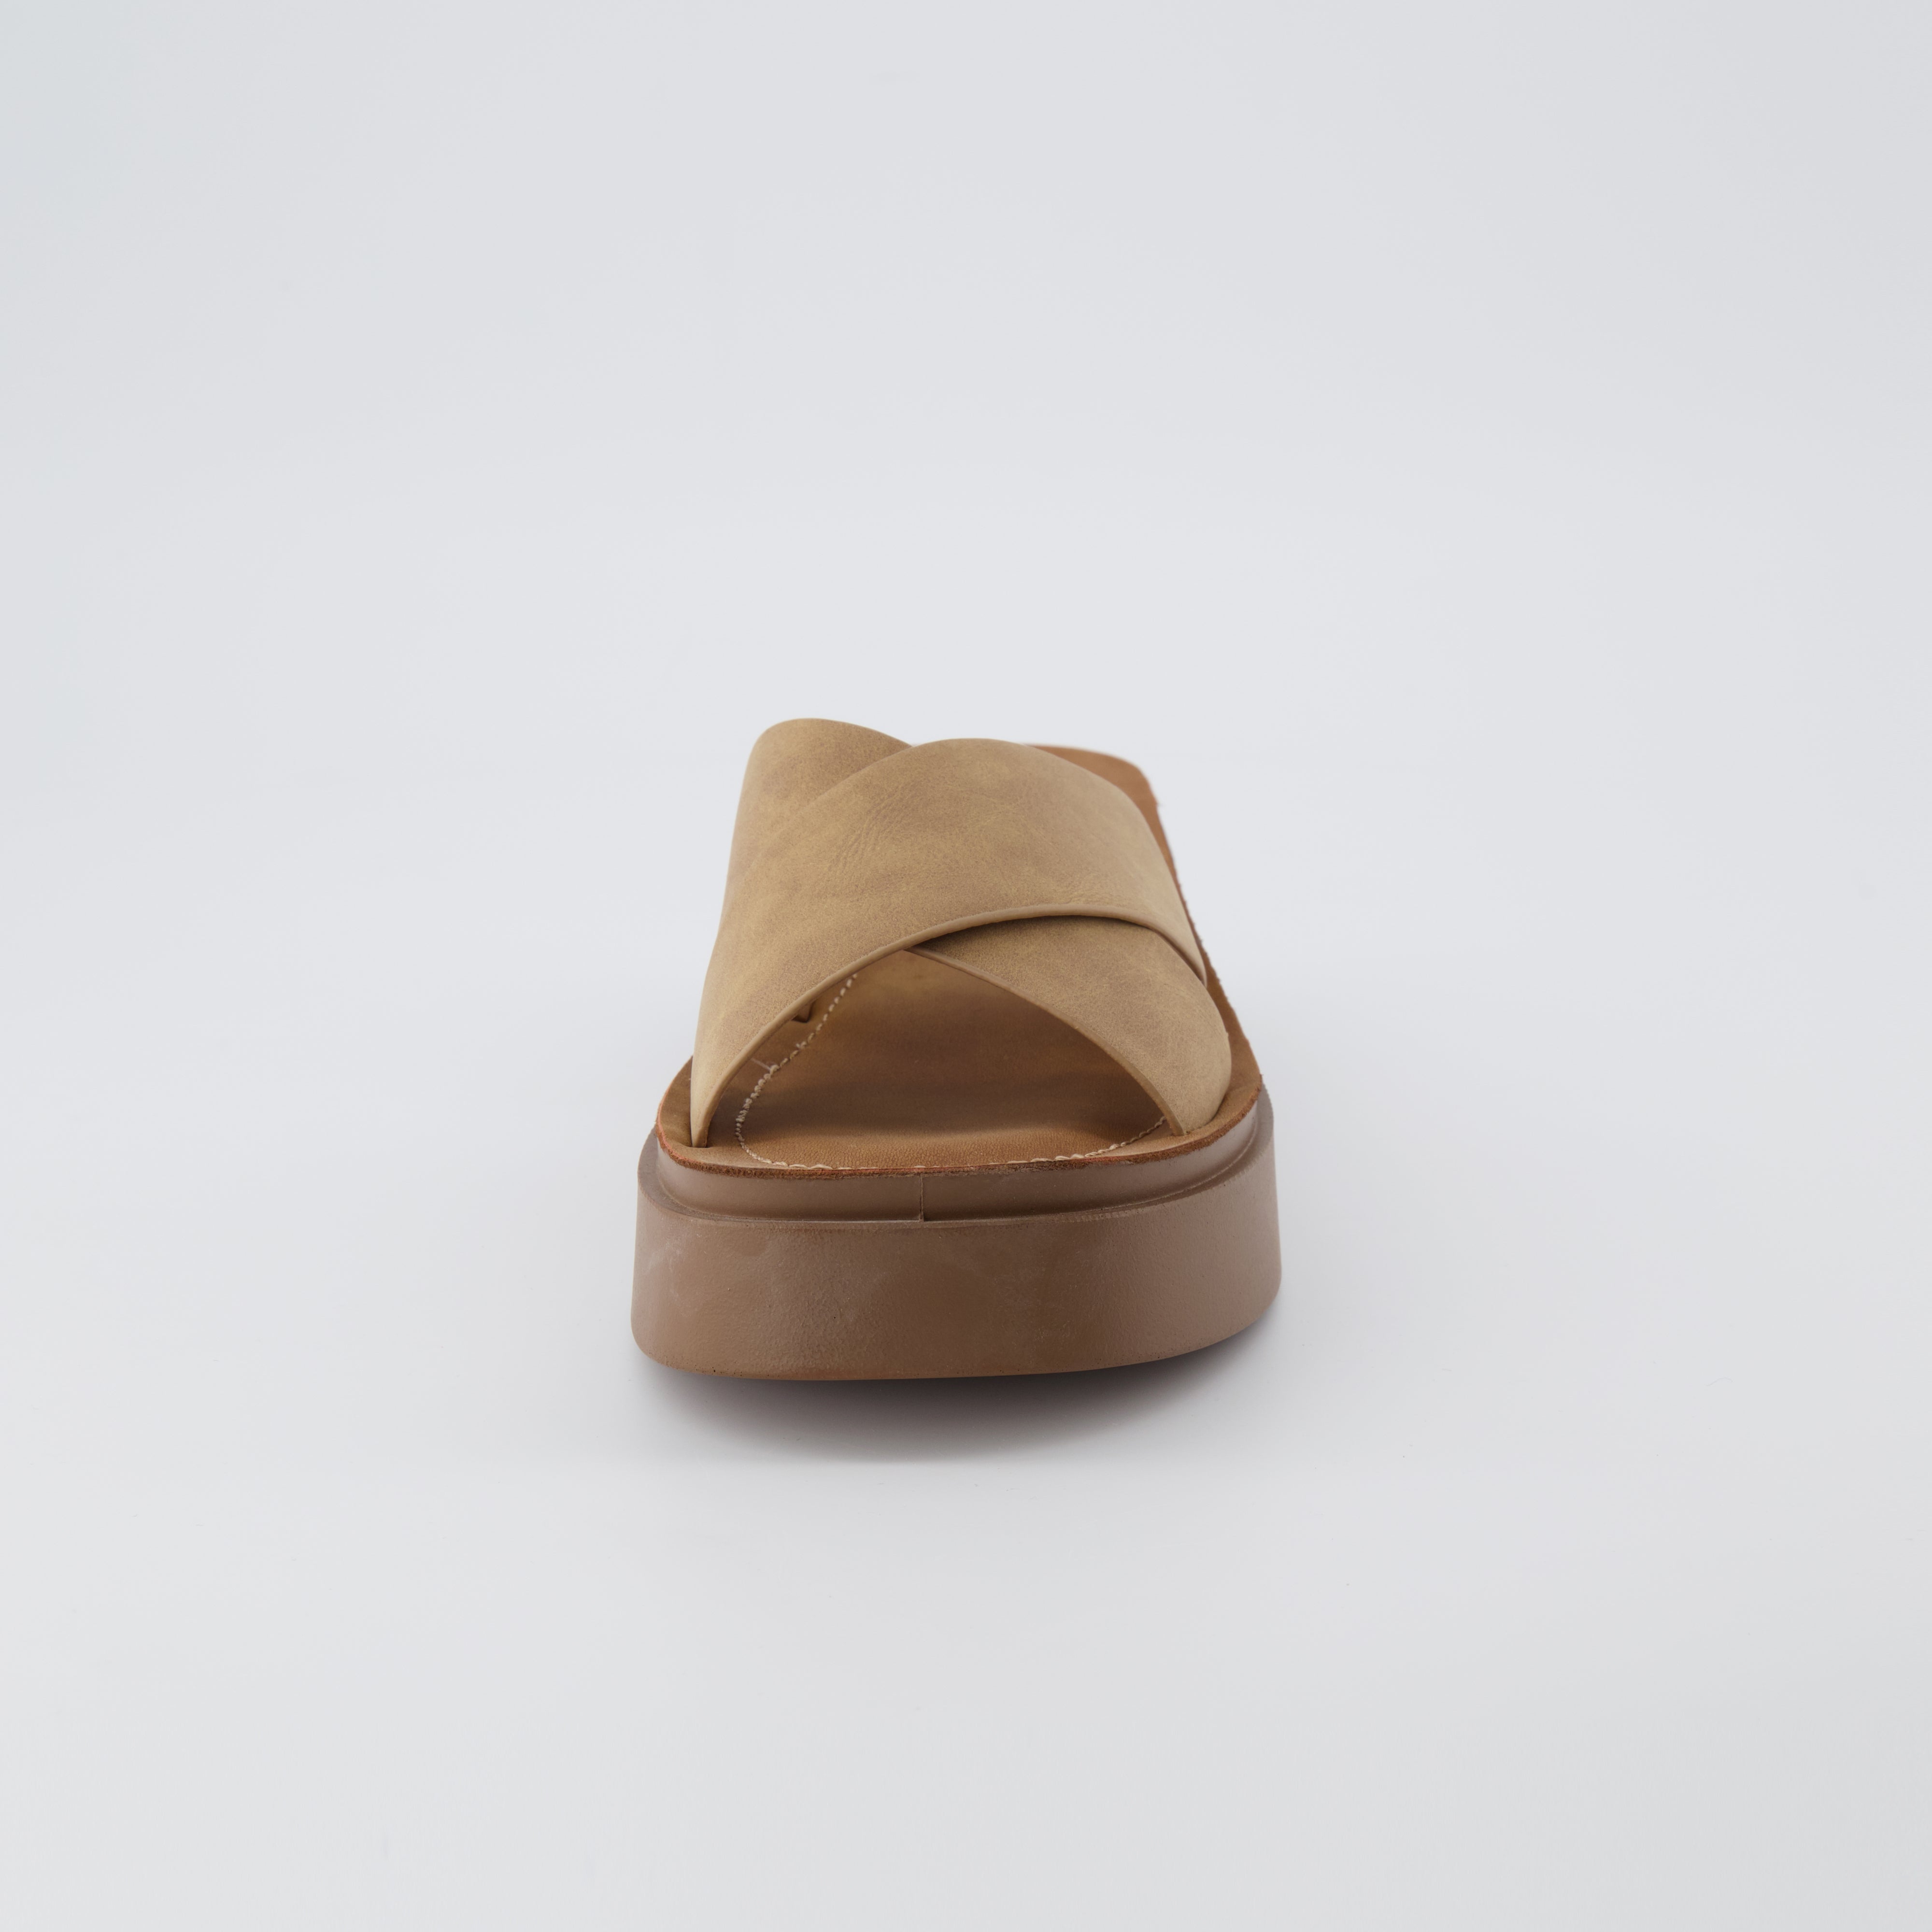 Pèpè metallic-effect leather sandals